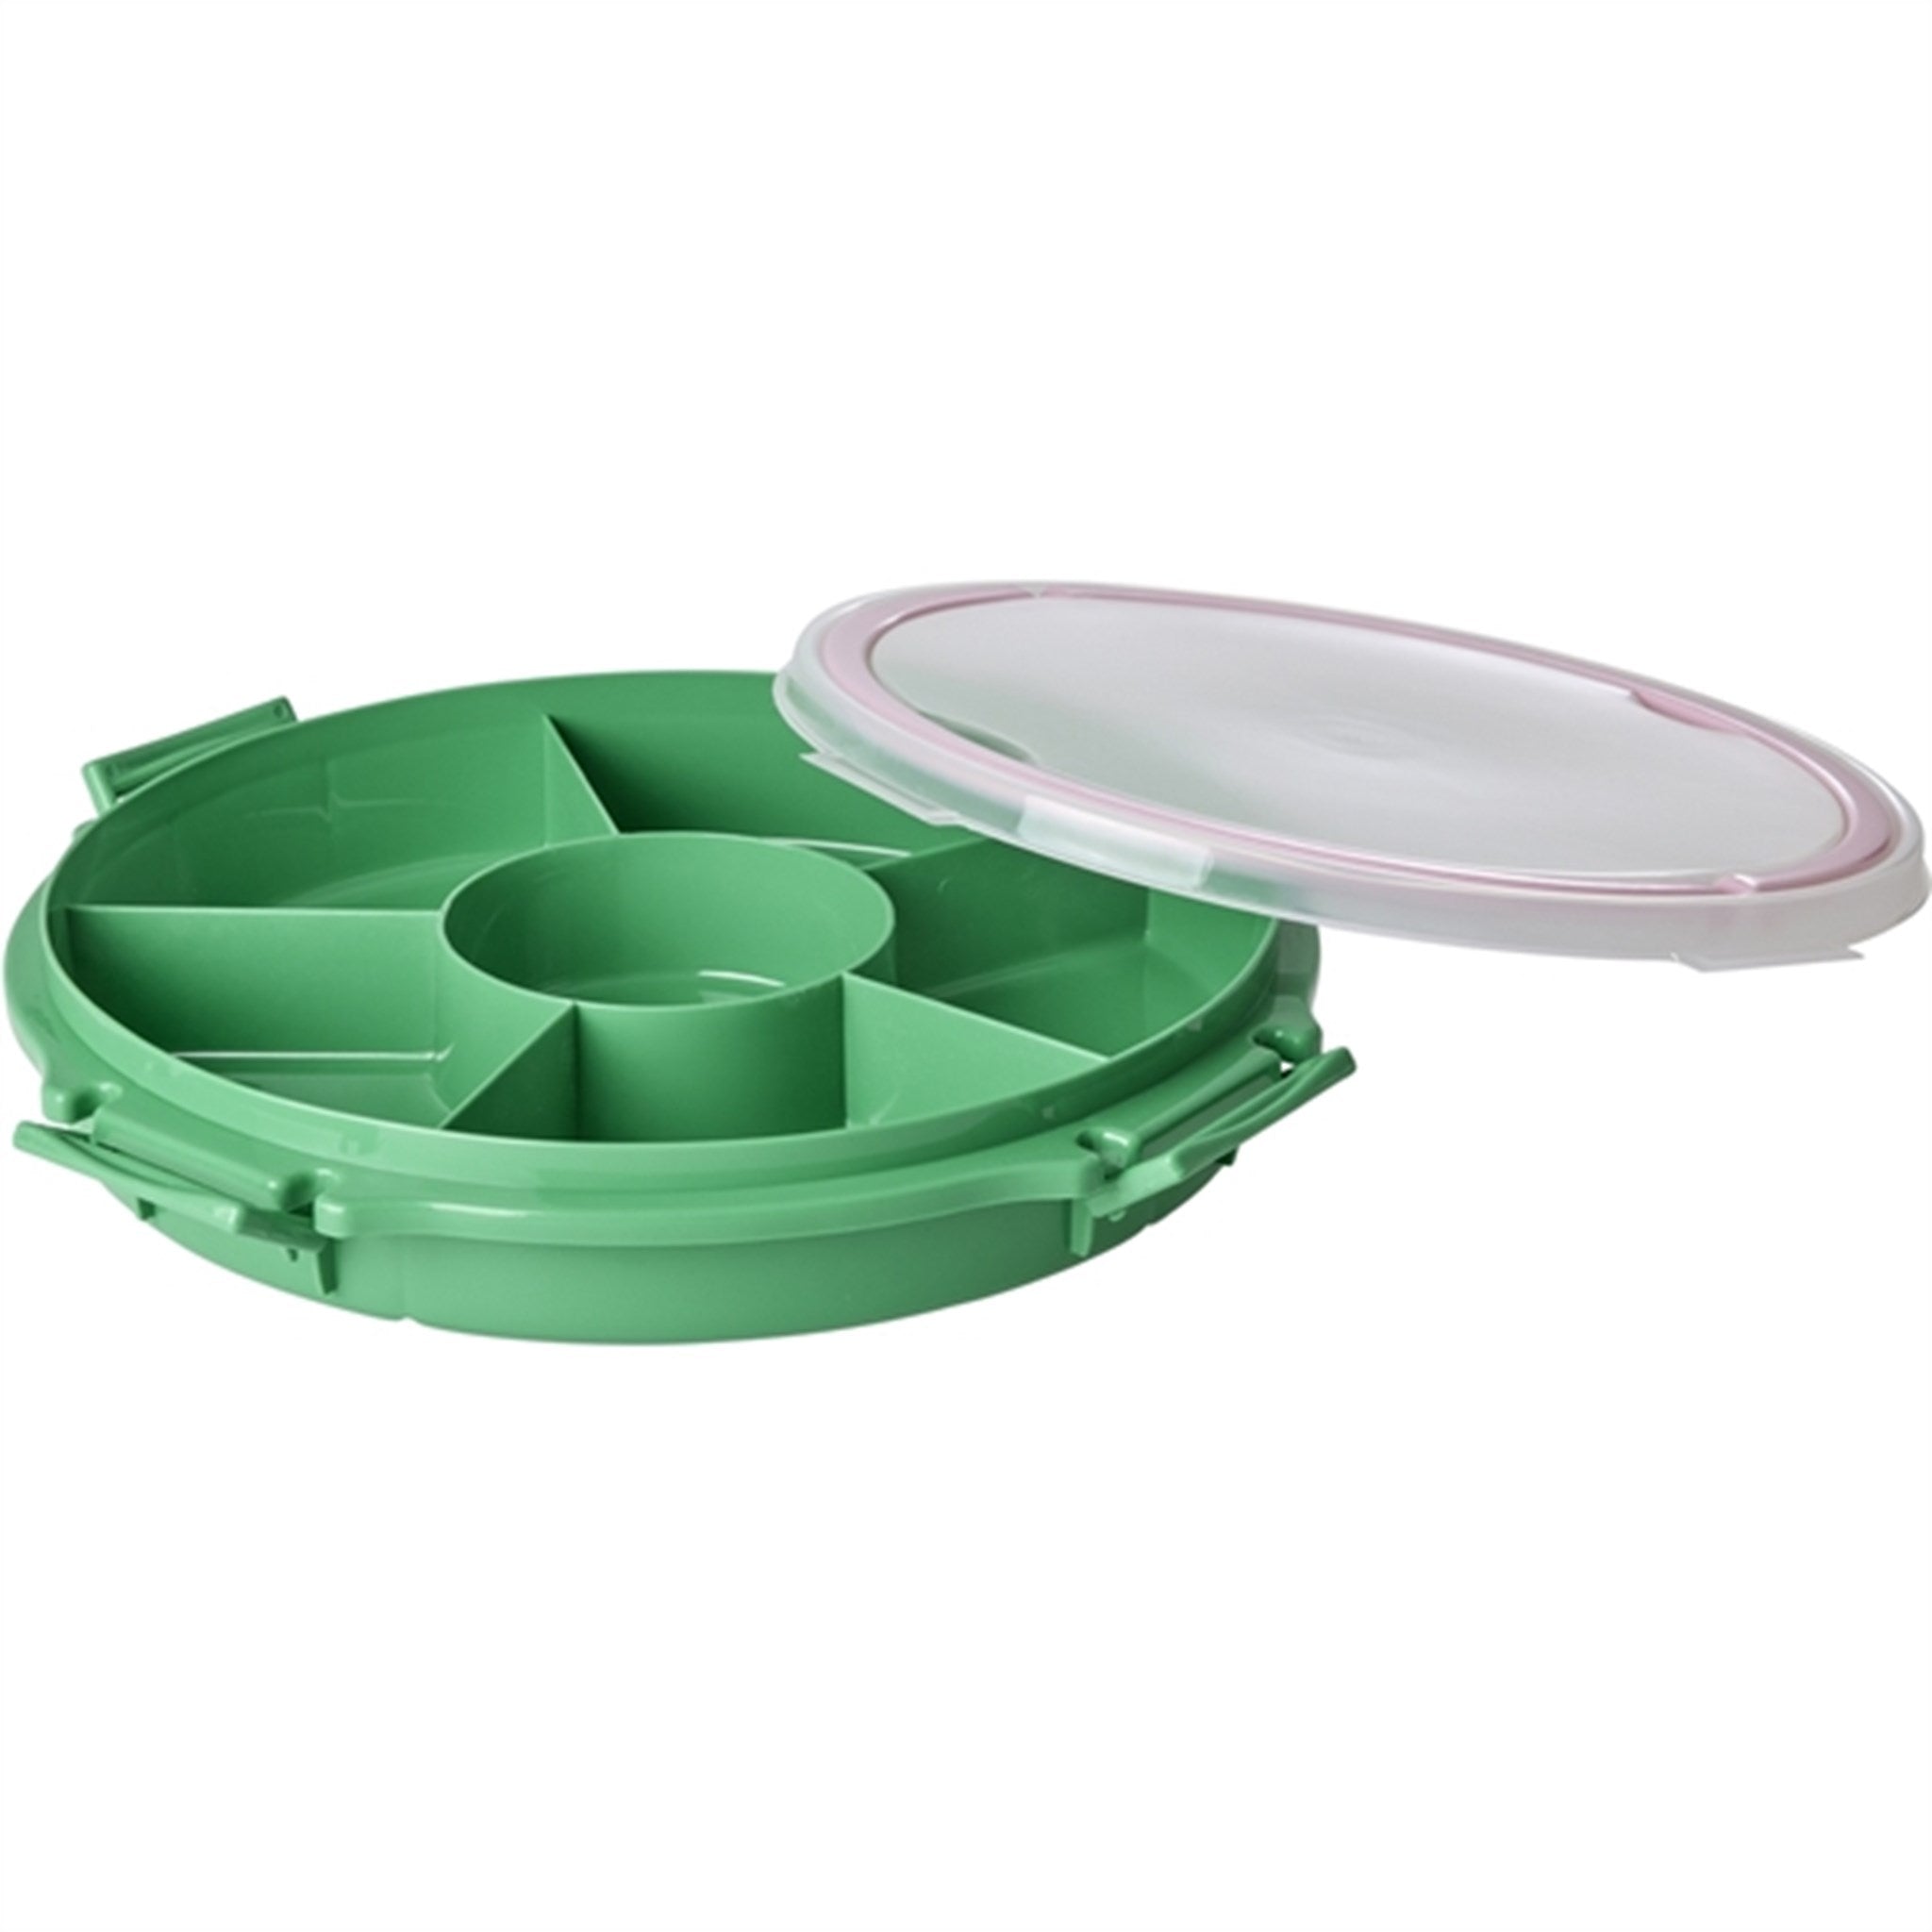 RICE 绿色托盘 - 丰富多彩且实用的餐具附属品